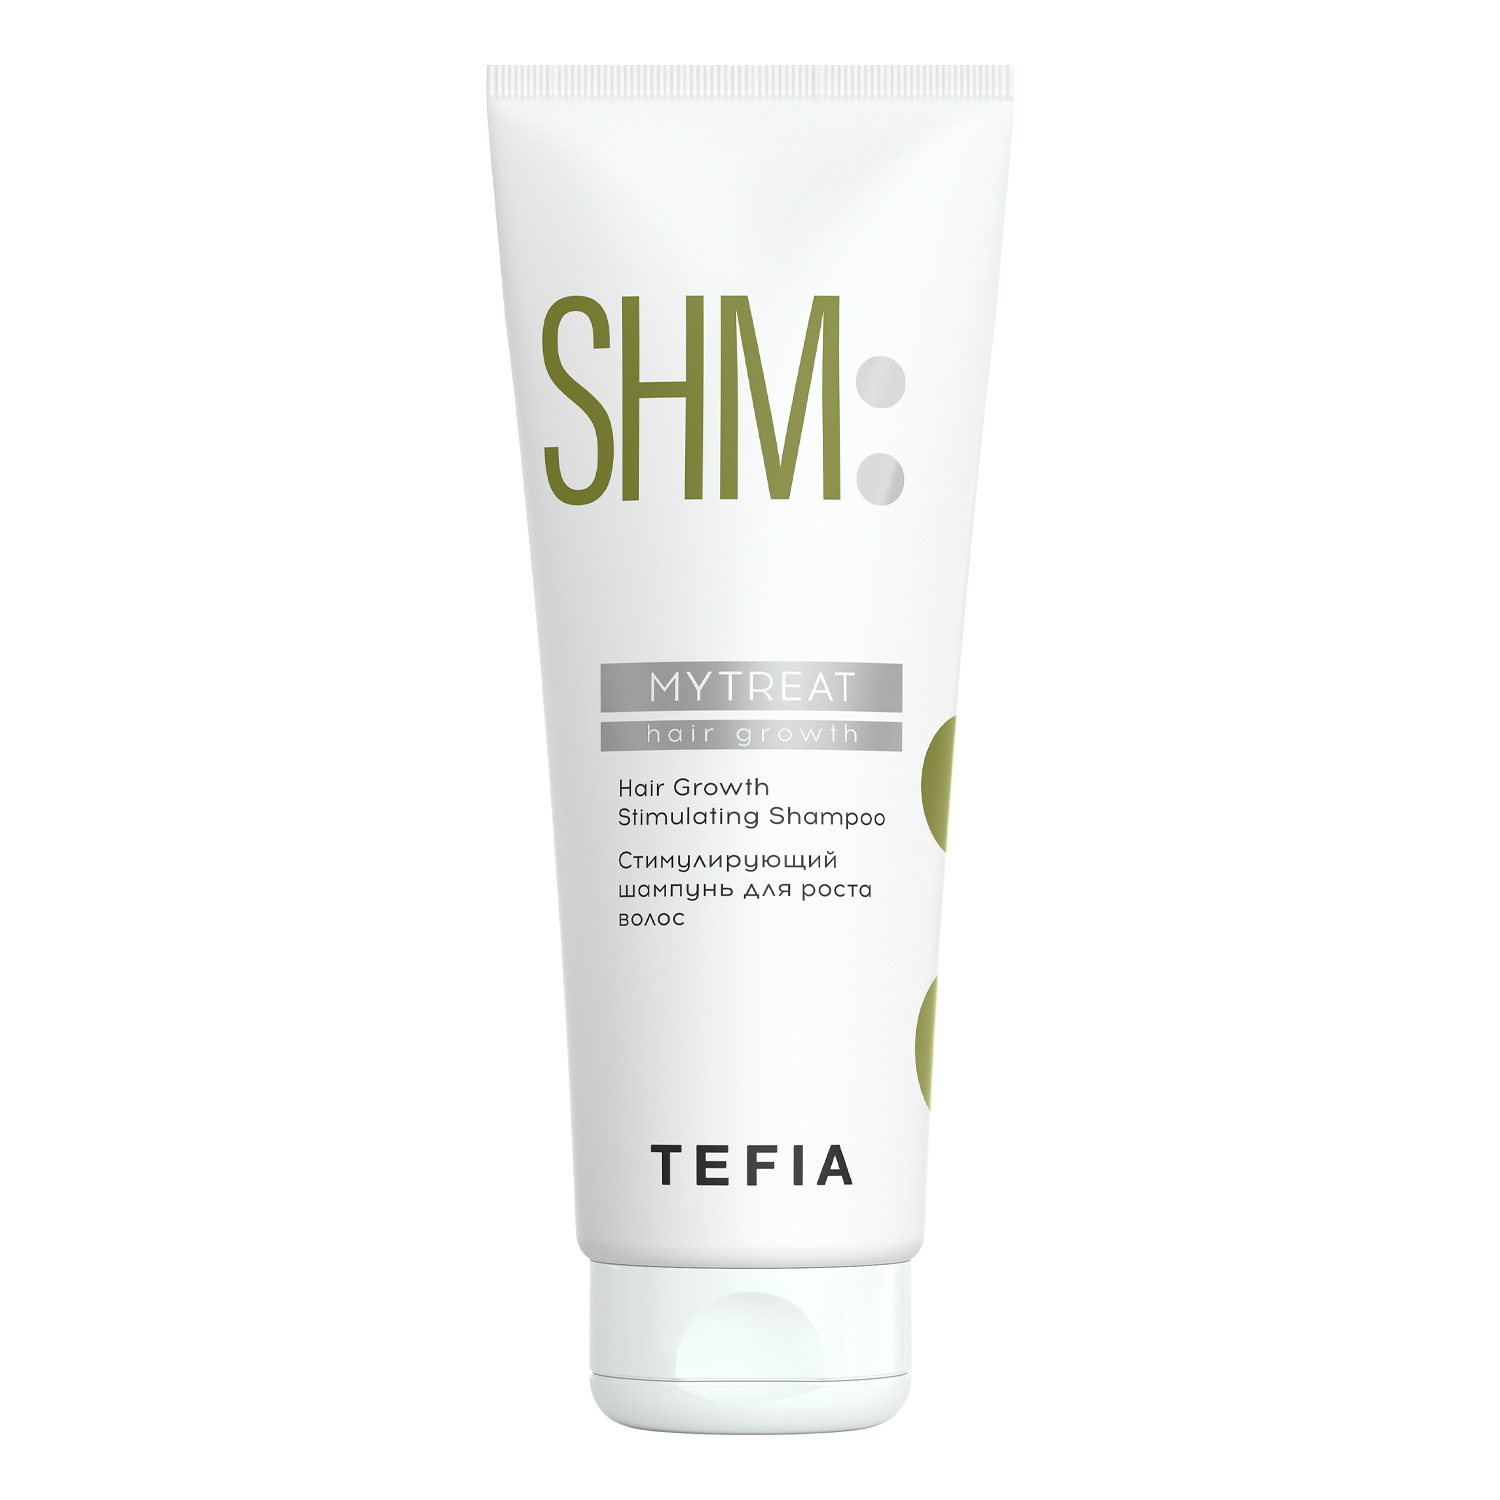 Tefia Стимулирующий шампунь для роста волос, 250 мл (Tefia, MyTreat) шампунь для волос tefia стимулирующий шампунь для роста волос hair stimulating shampoo mytreat